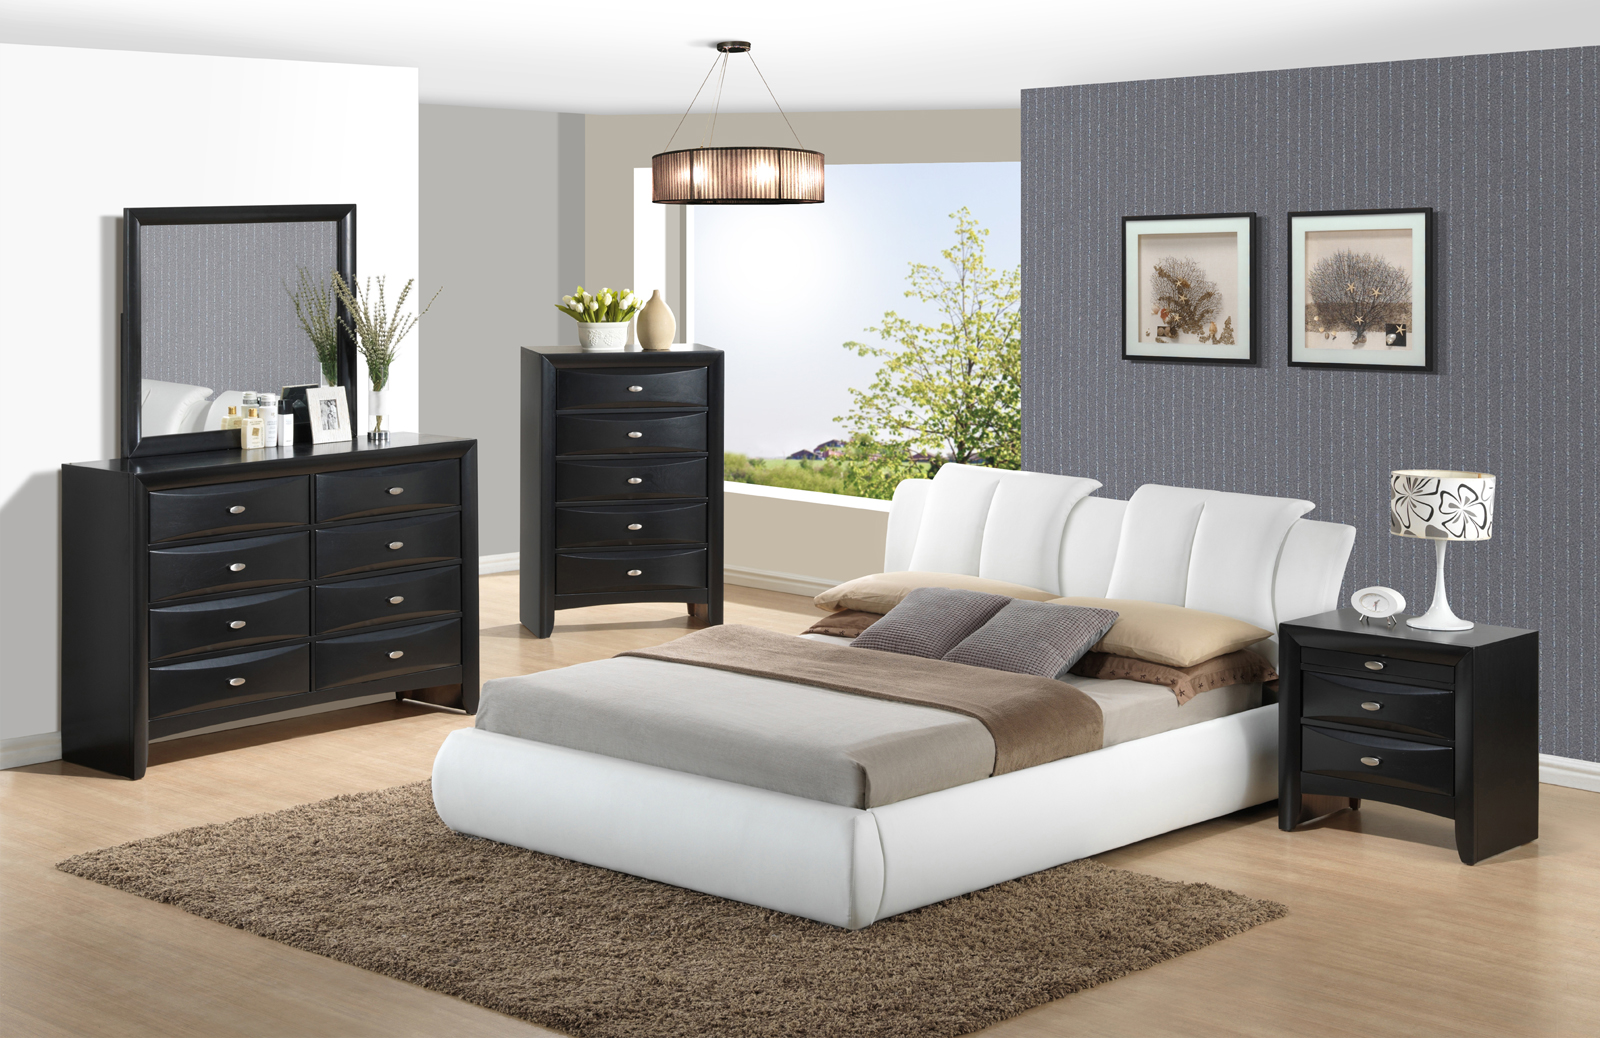 global home bedroom furniture